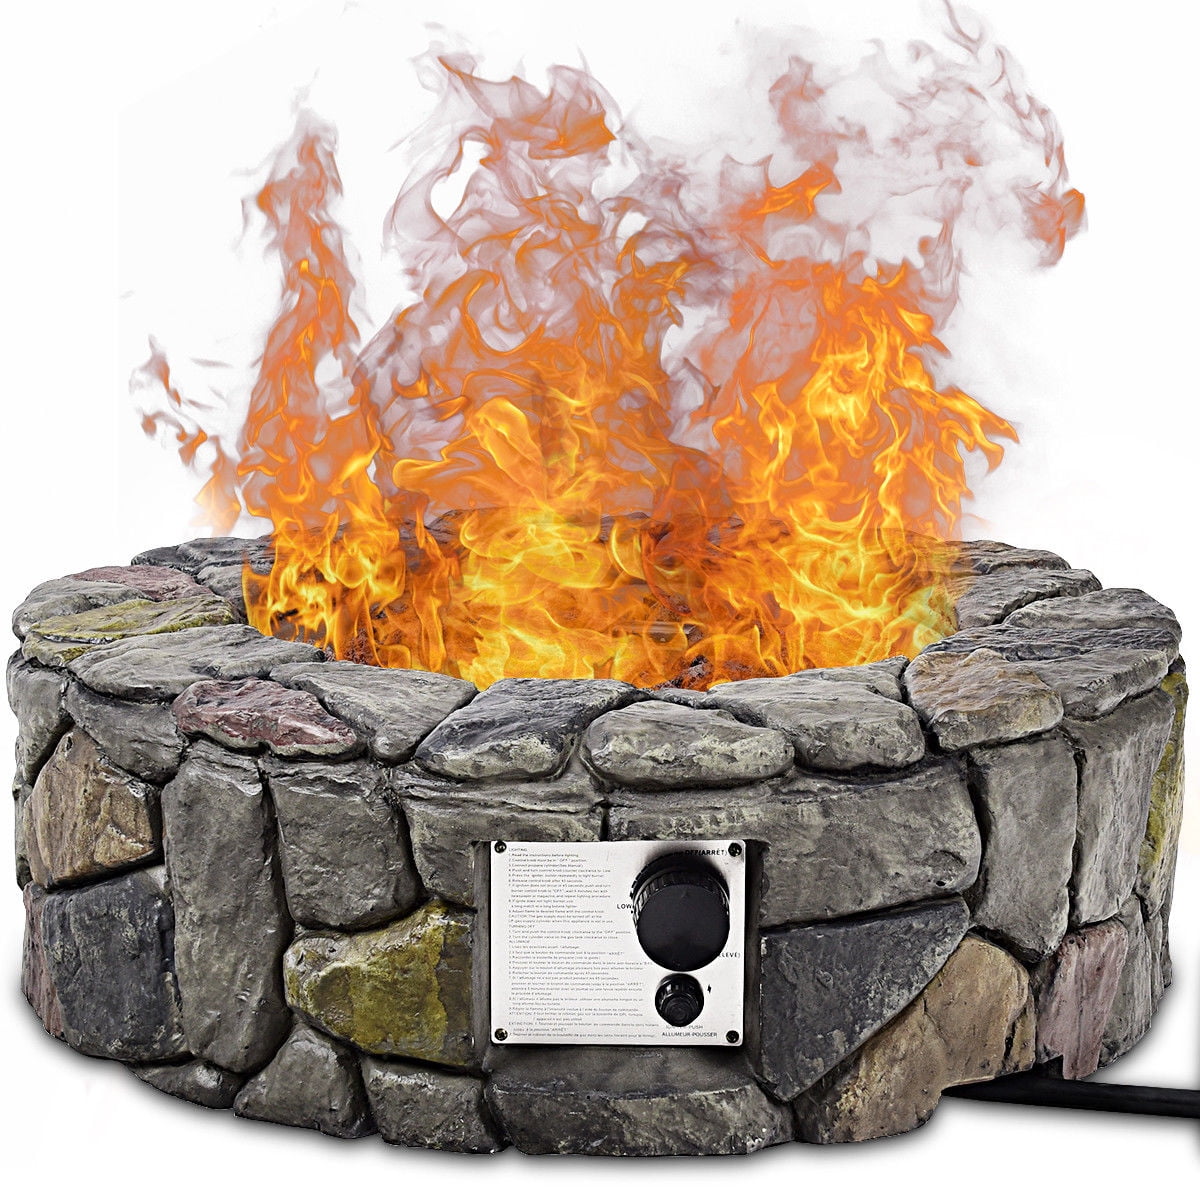 Details about   Patio Propane Burning Outdoor Fire Bowl Column W/ Lava Rocks & Cover 40,000 BTU 